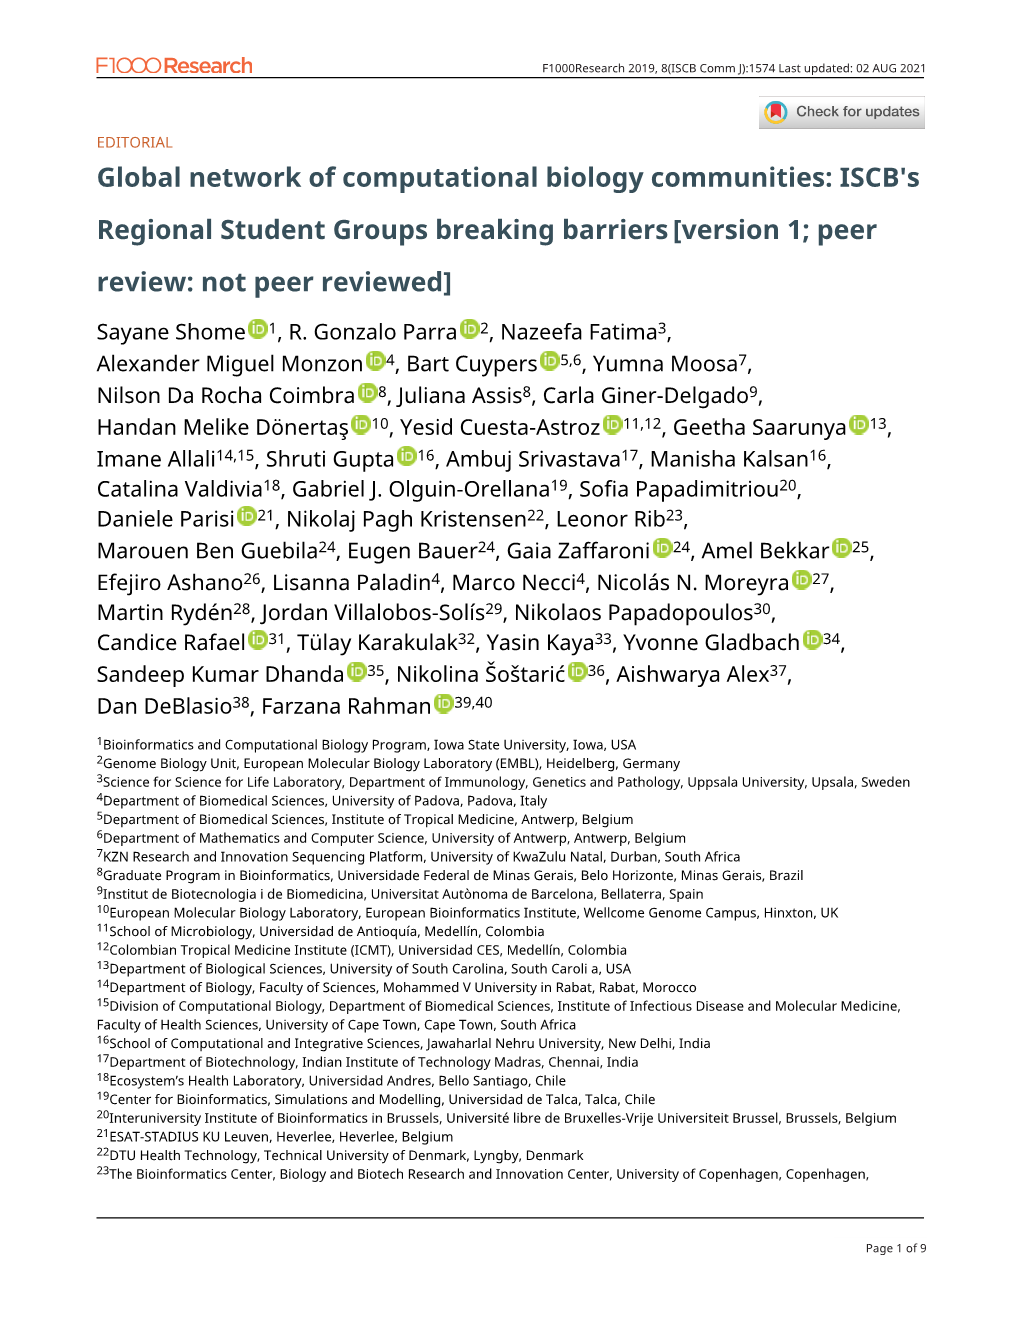 Global Network of Computational Biology Communities: ISCB's